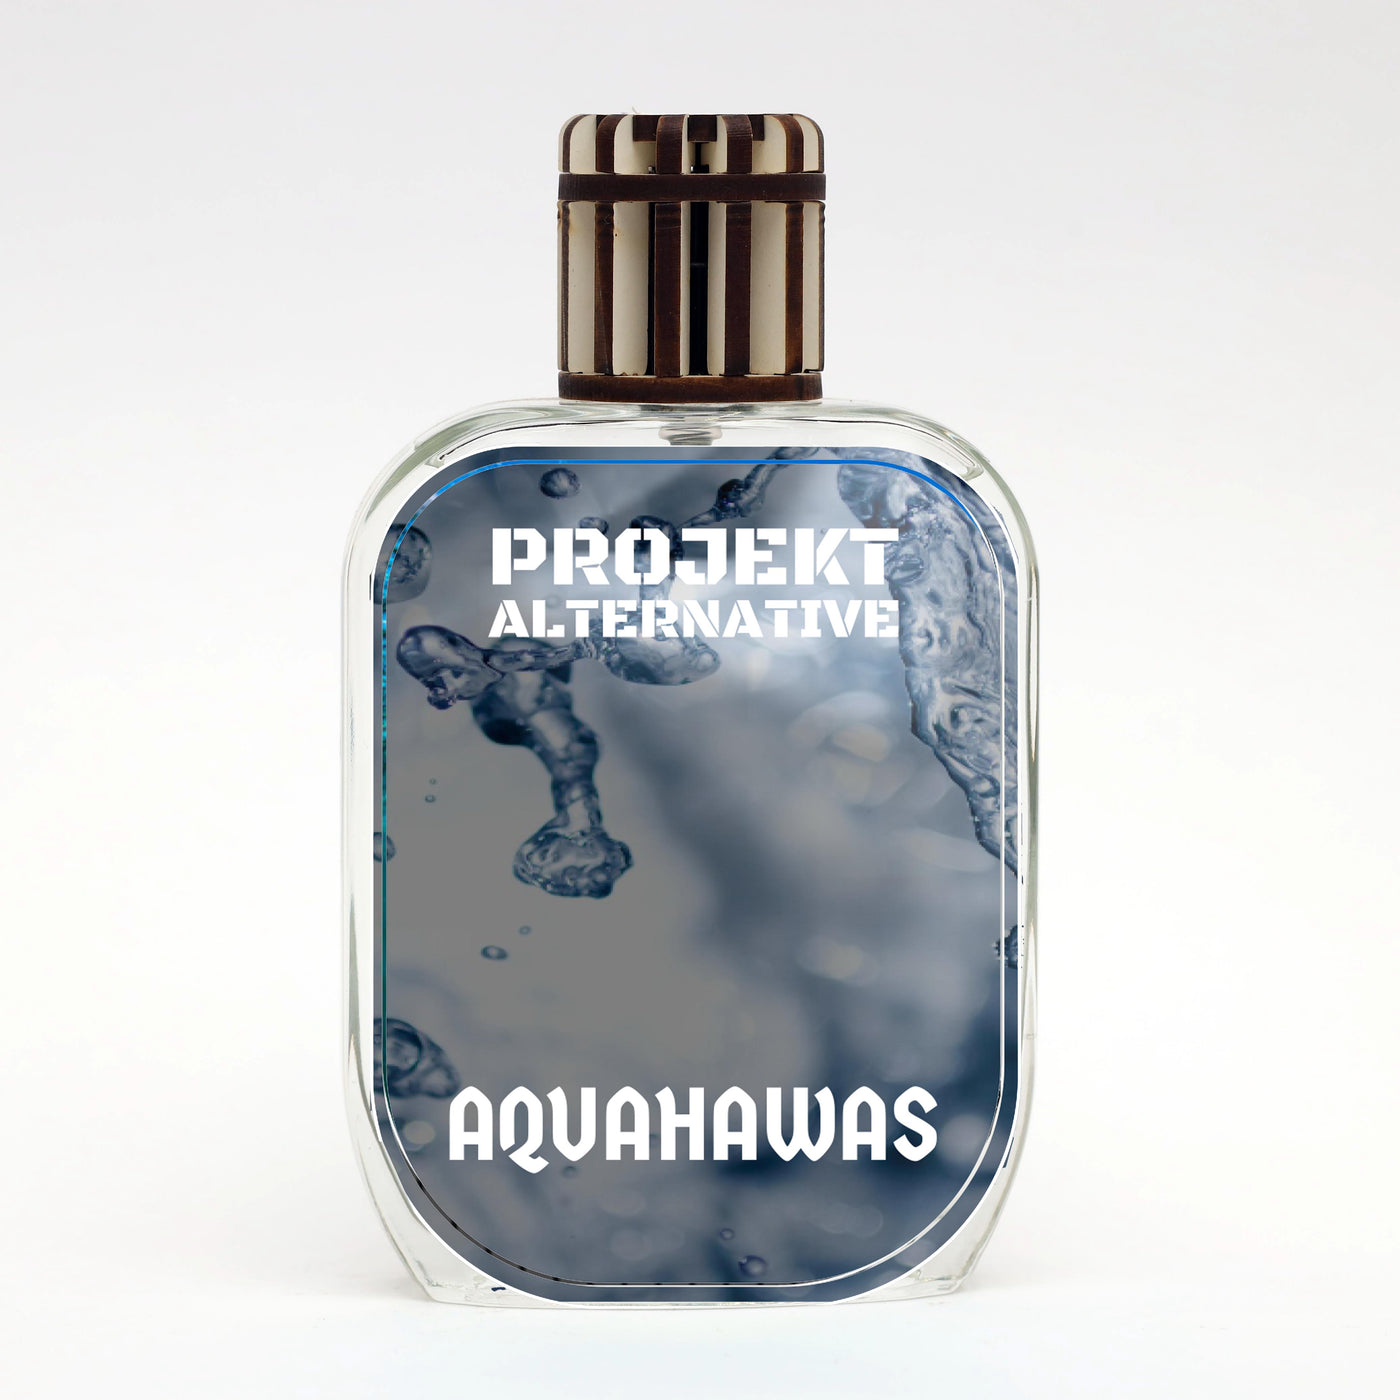 AQUA HAWAS By Projekt Alternative